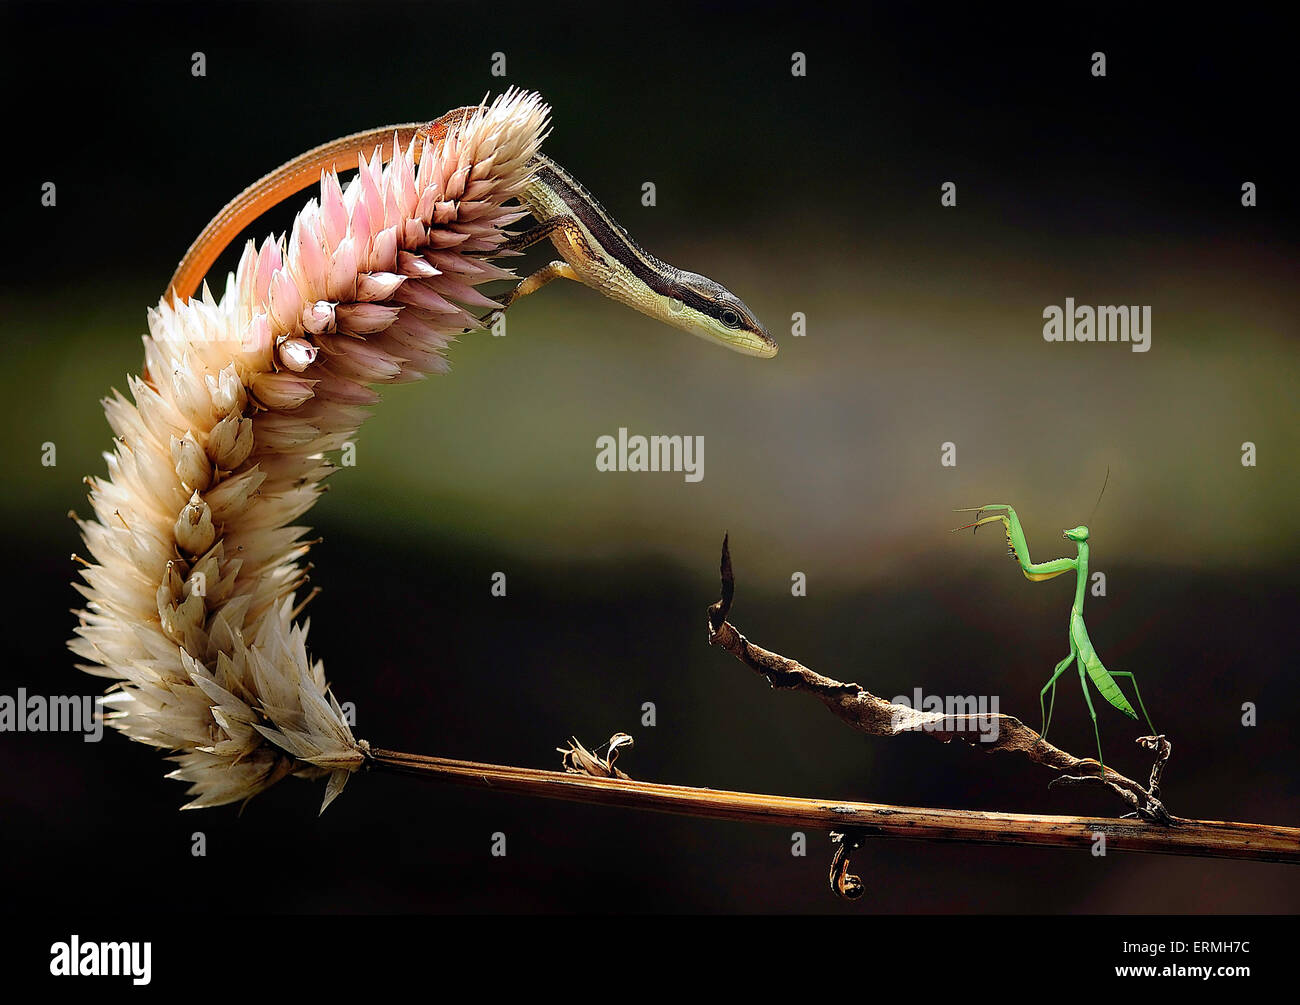 Lizard versus Praying mantis Stock Photo